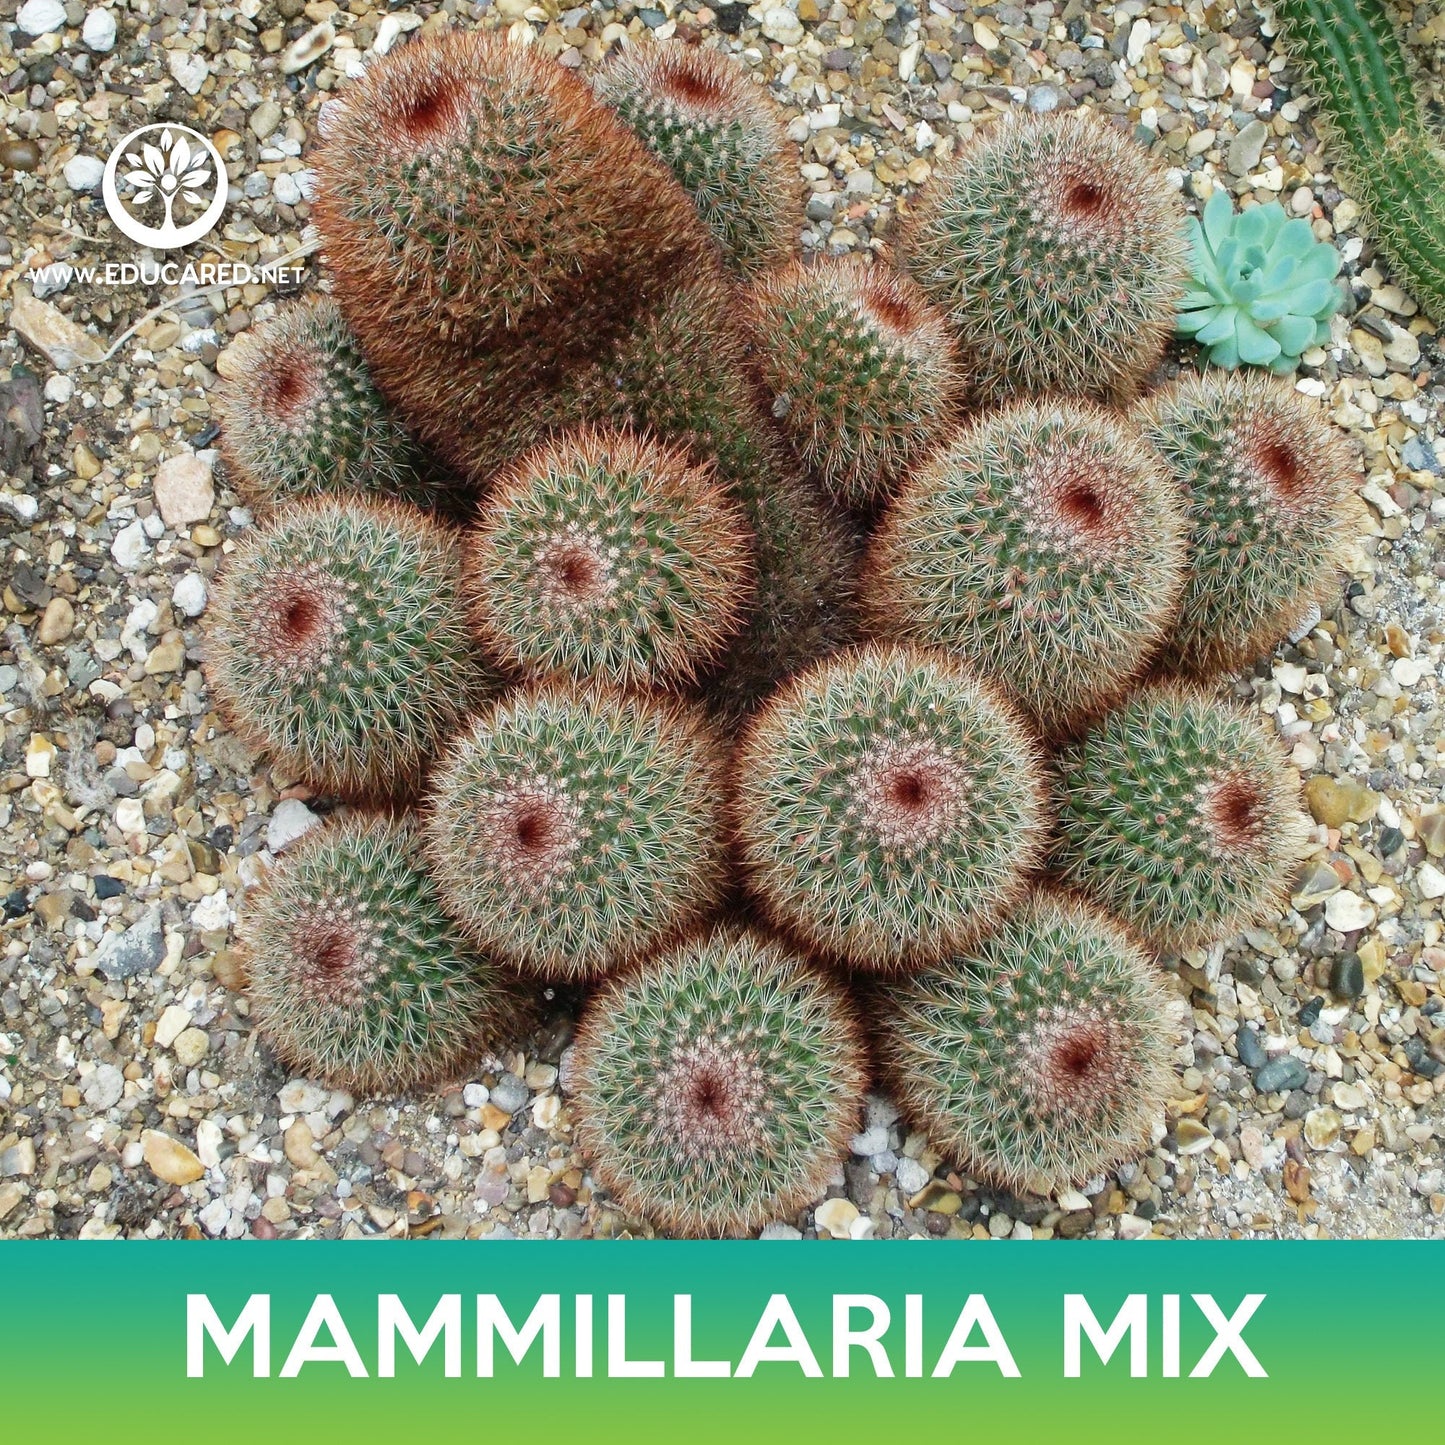 Mammillaria Cactus Mix Seeds